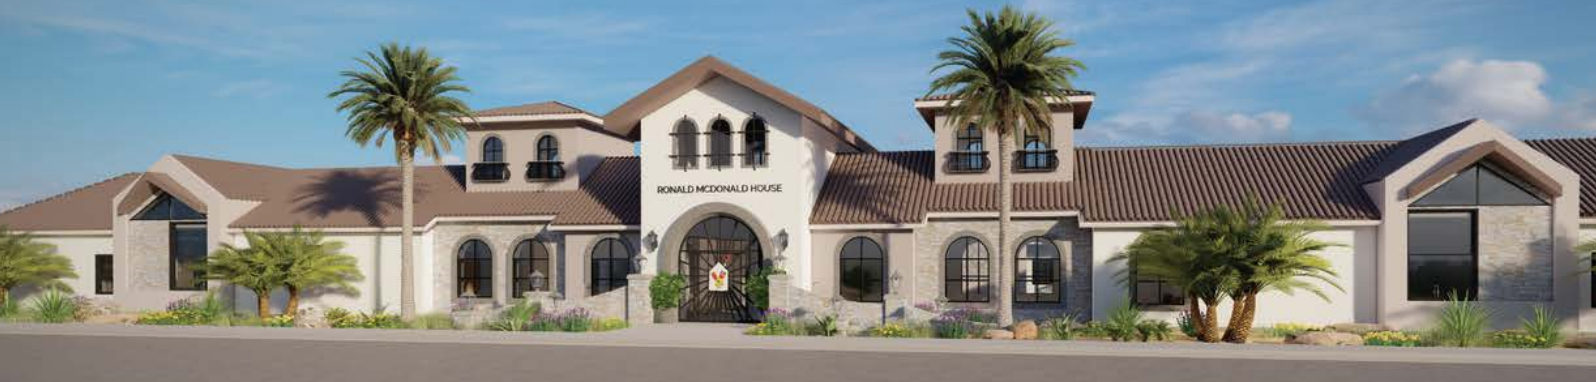 Vegas Golden Knights Foundation - Ronald McDonald House Charities